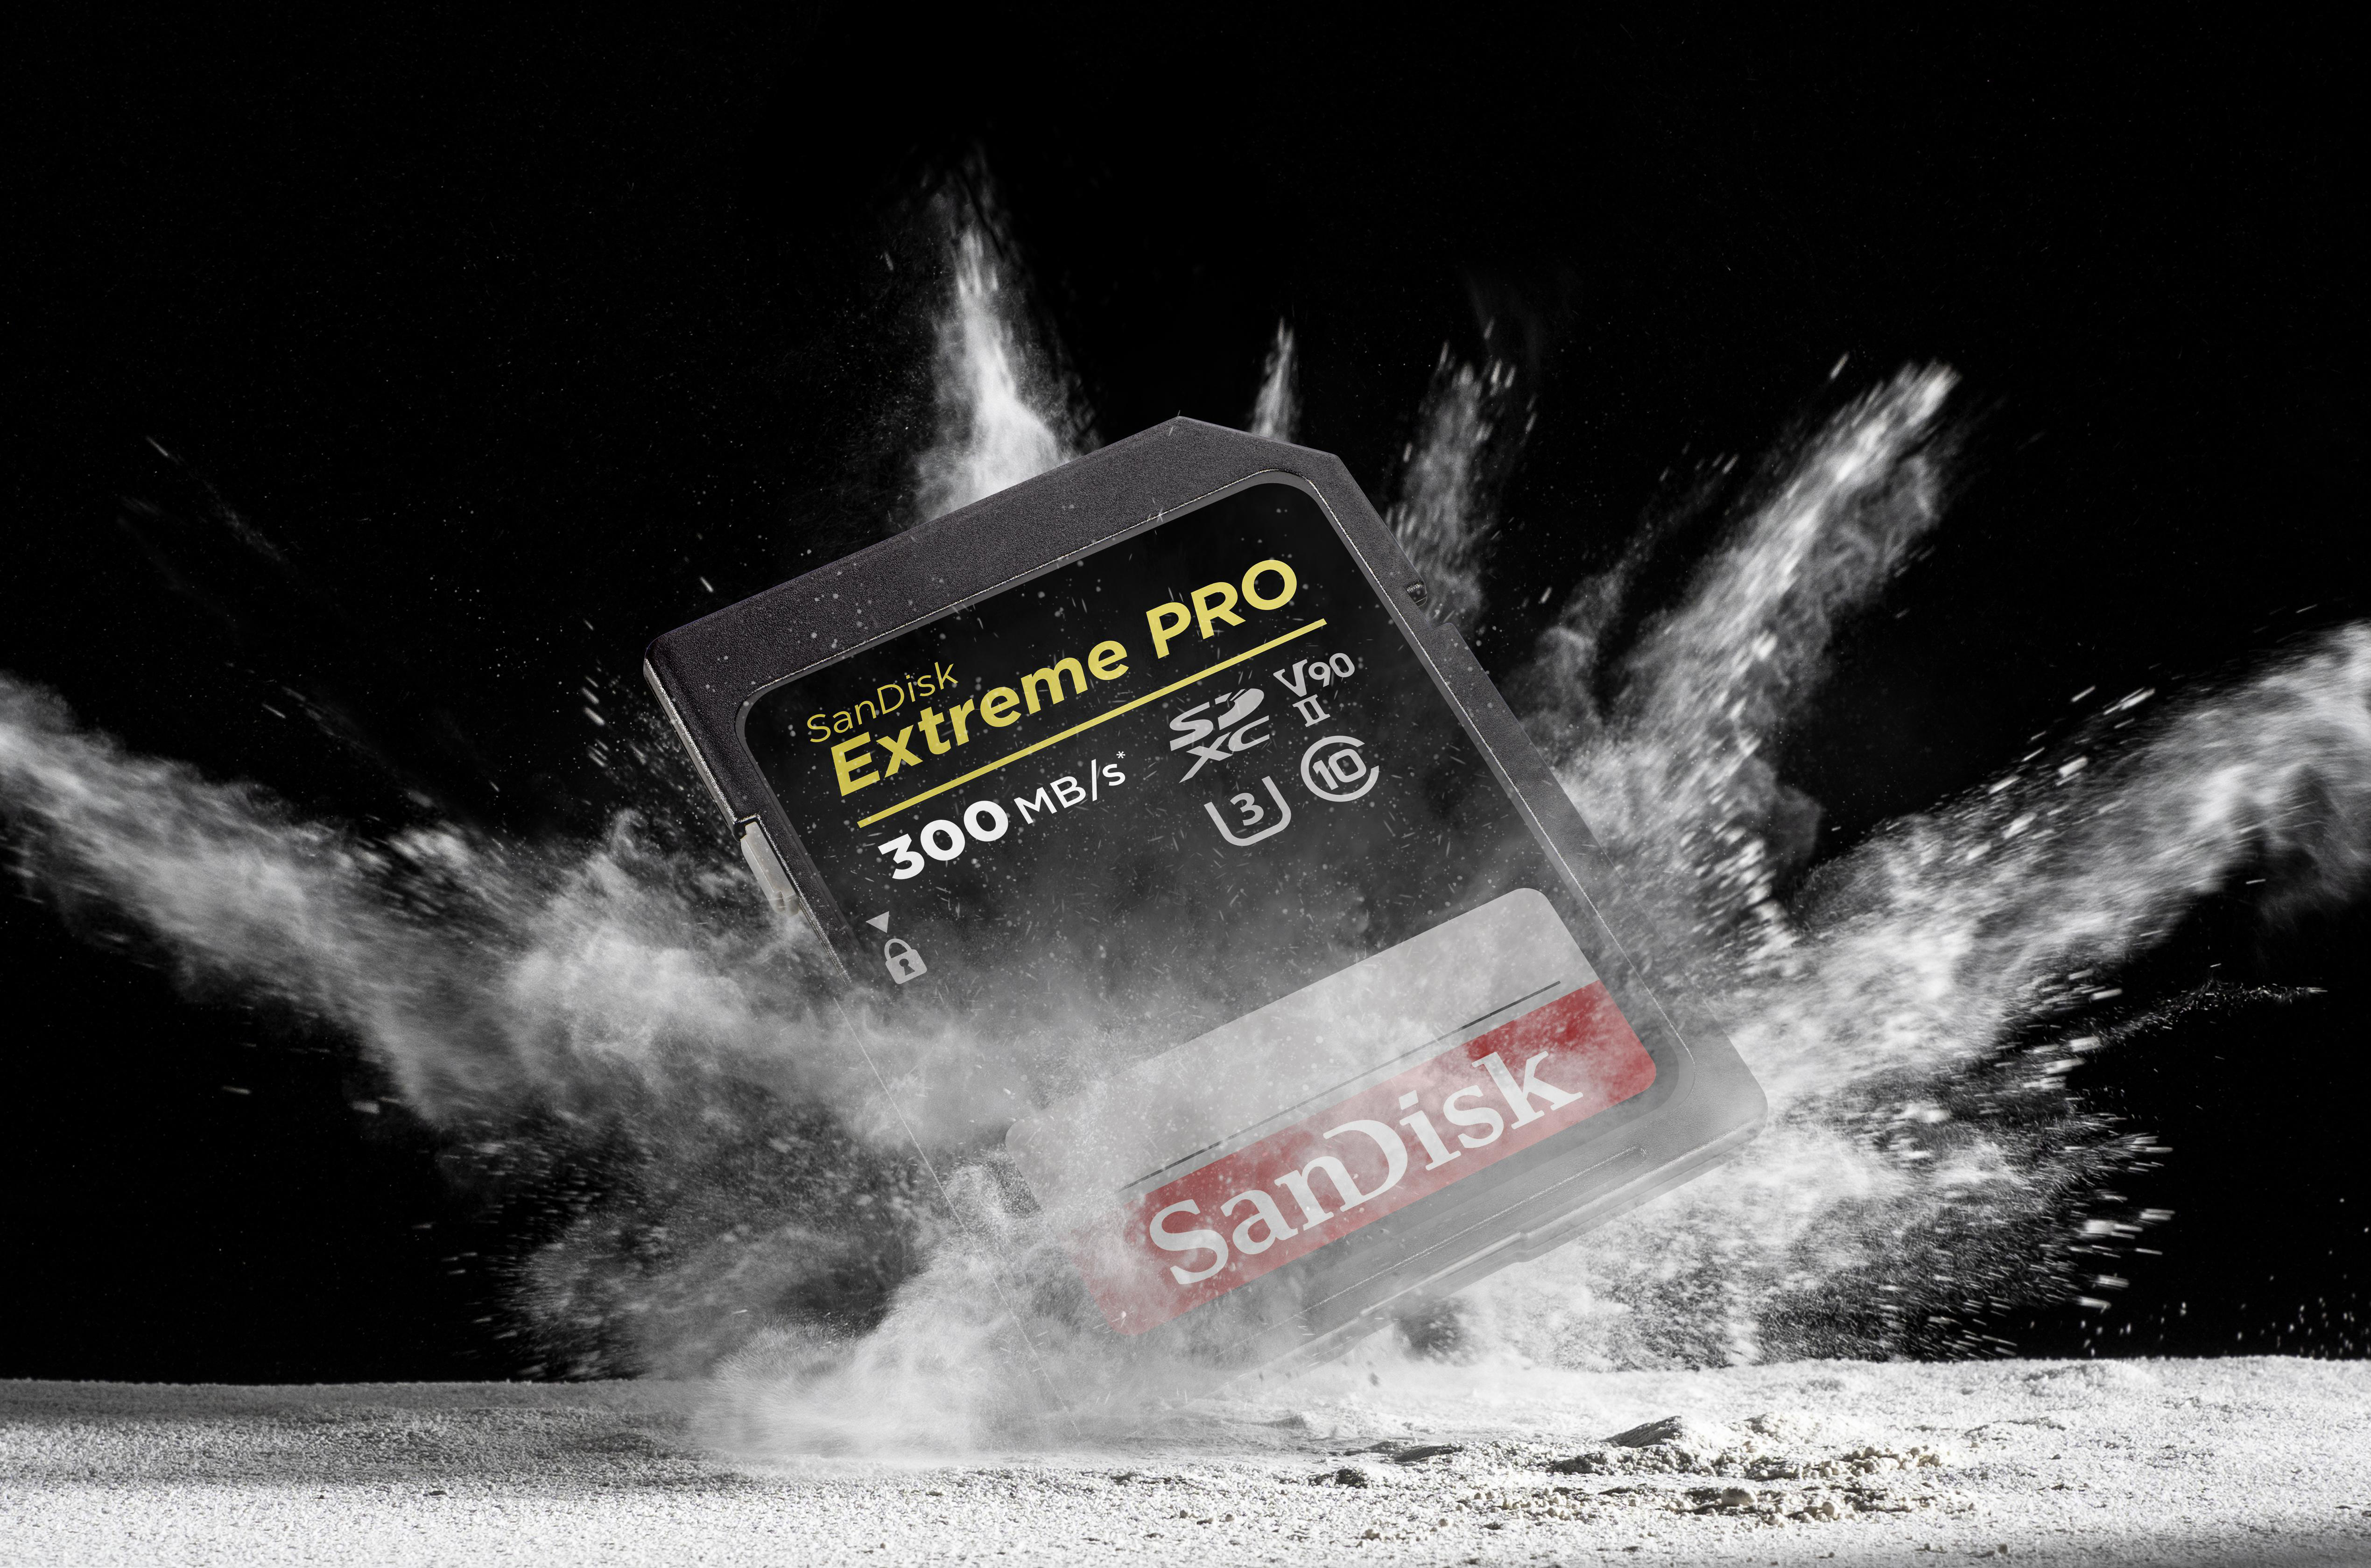 SANDISK Extreme 300 32 GB, Speicherkarte, PRO®, MB/s SDHC